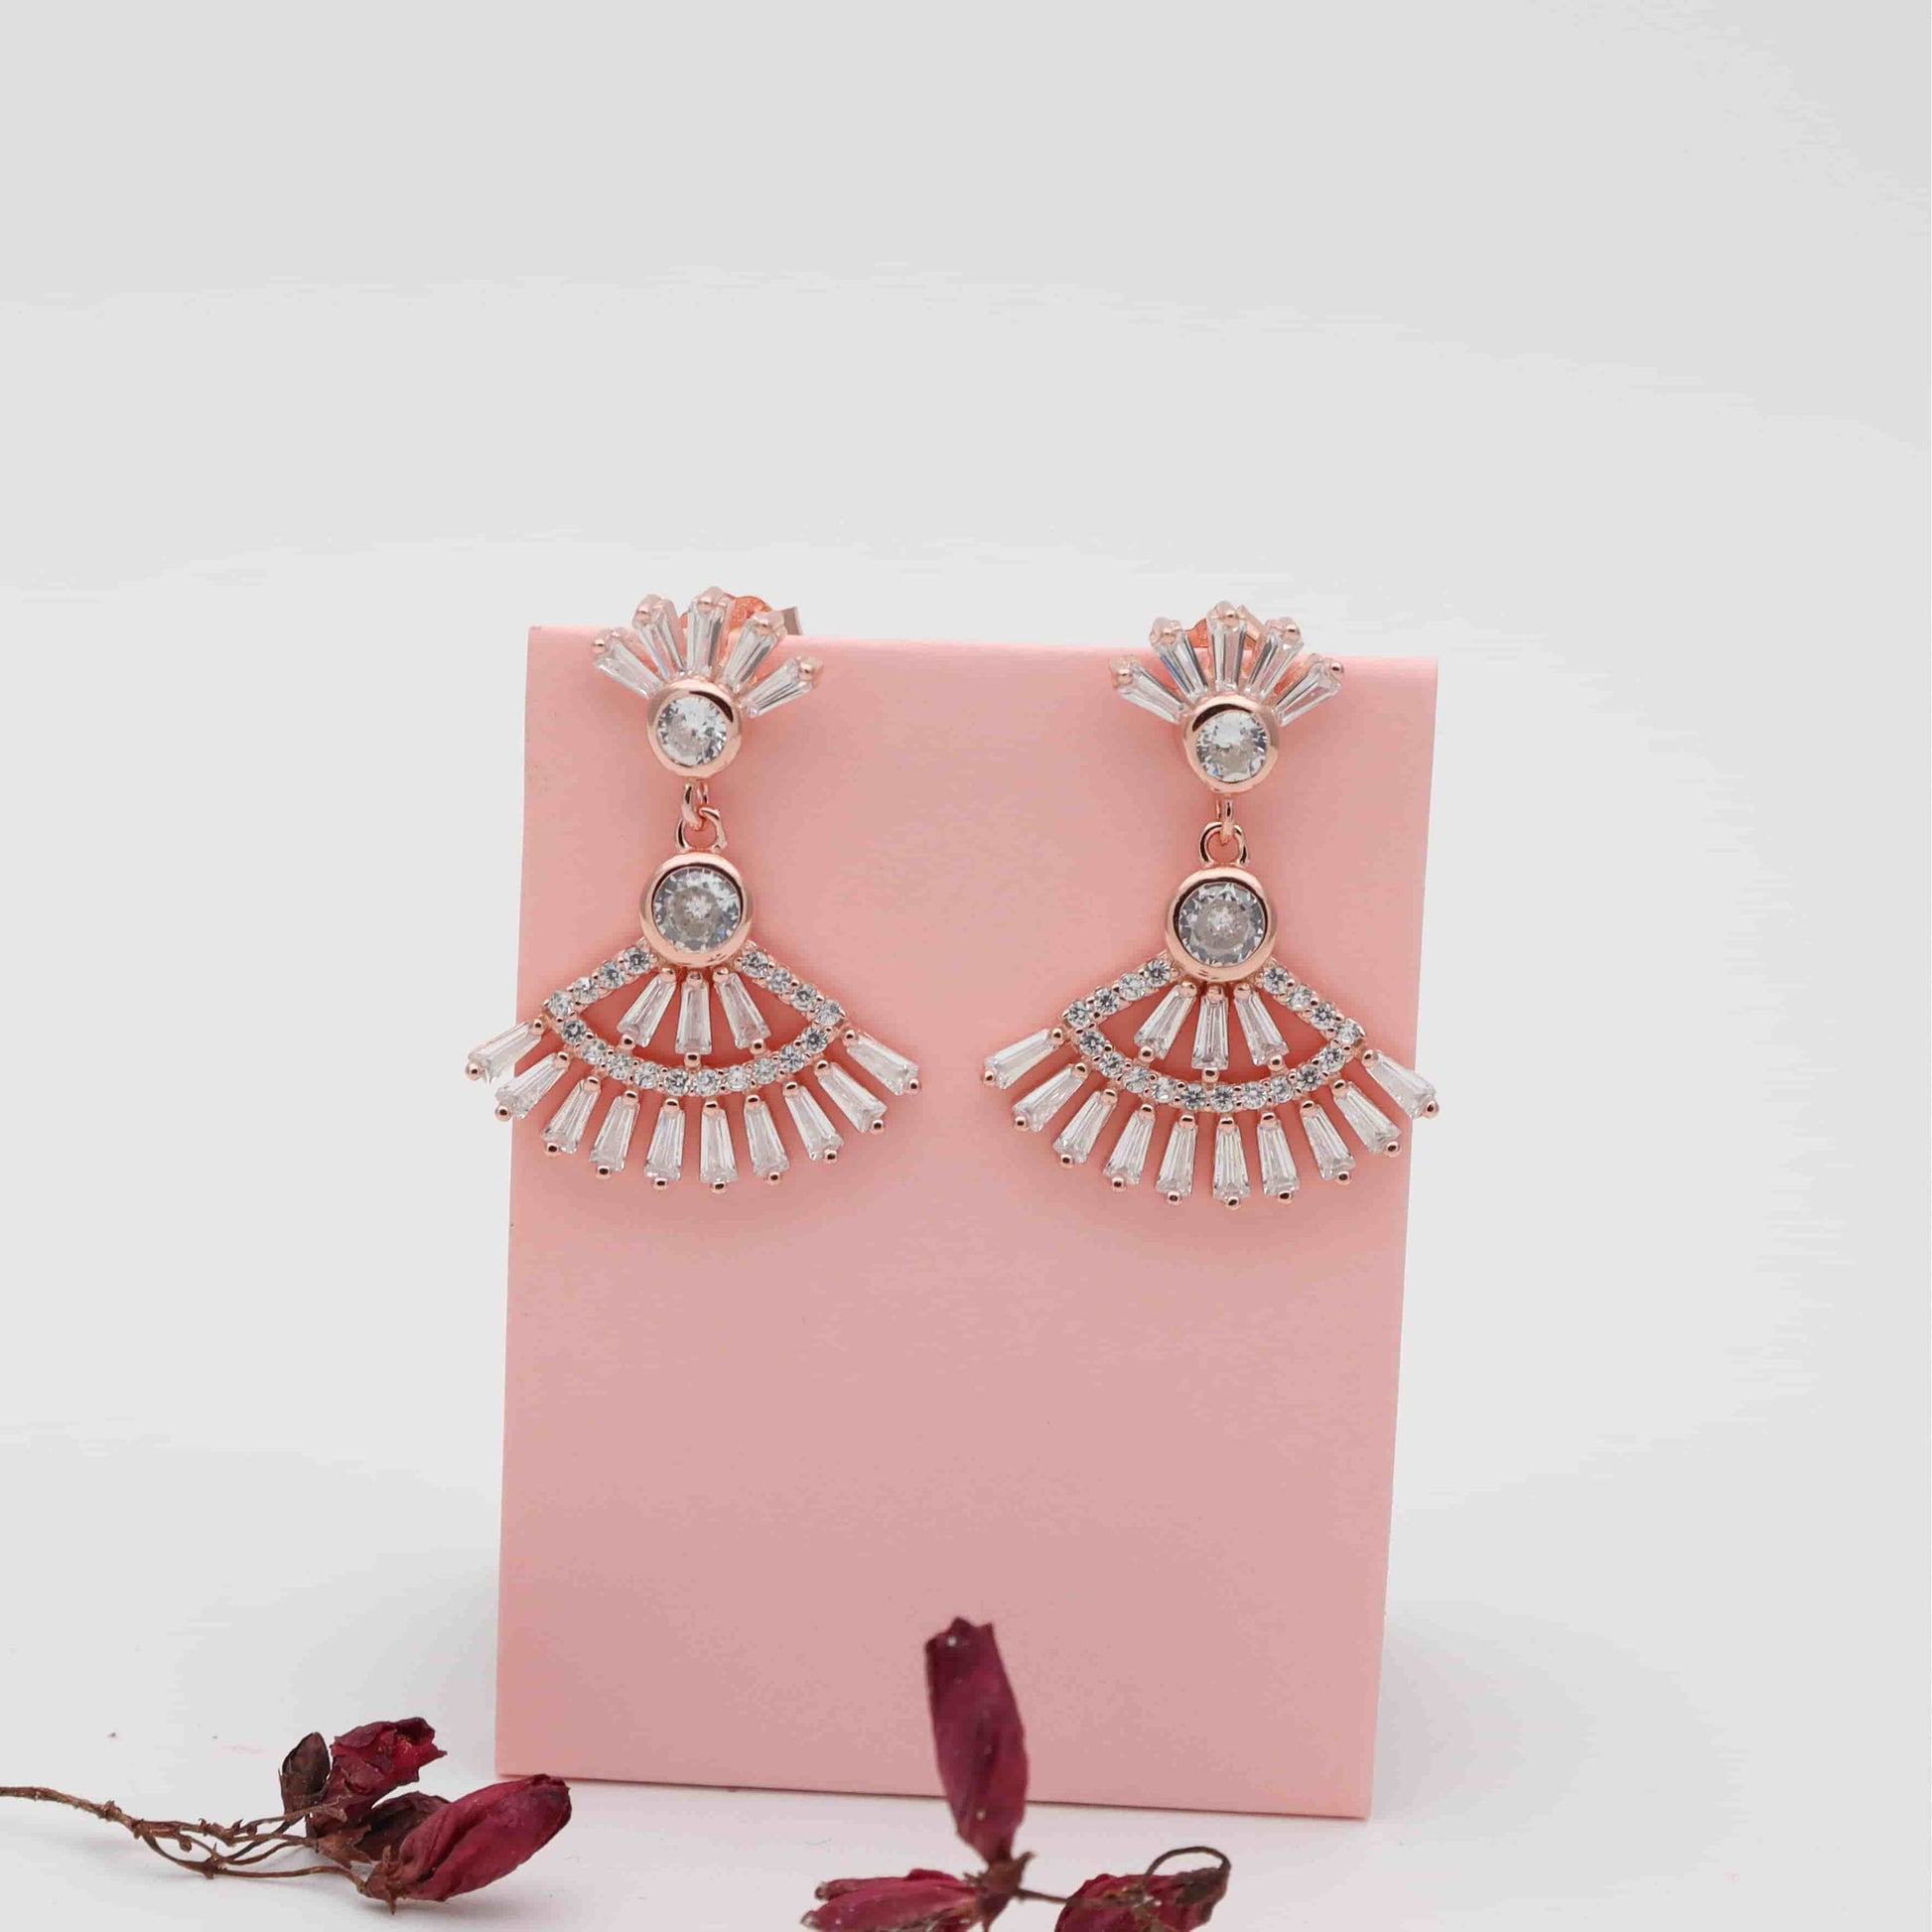 sterling silver earrings       birthday gift for girlfriend     